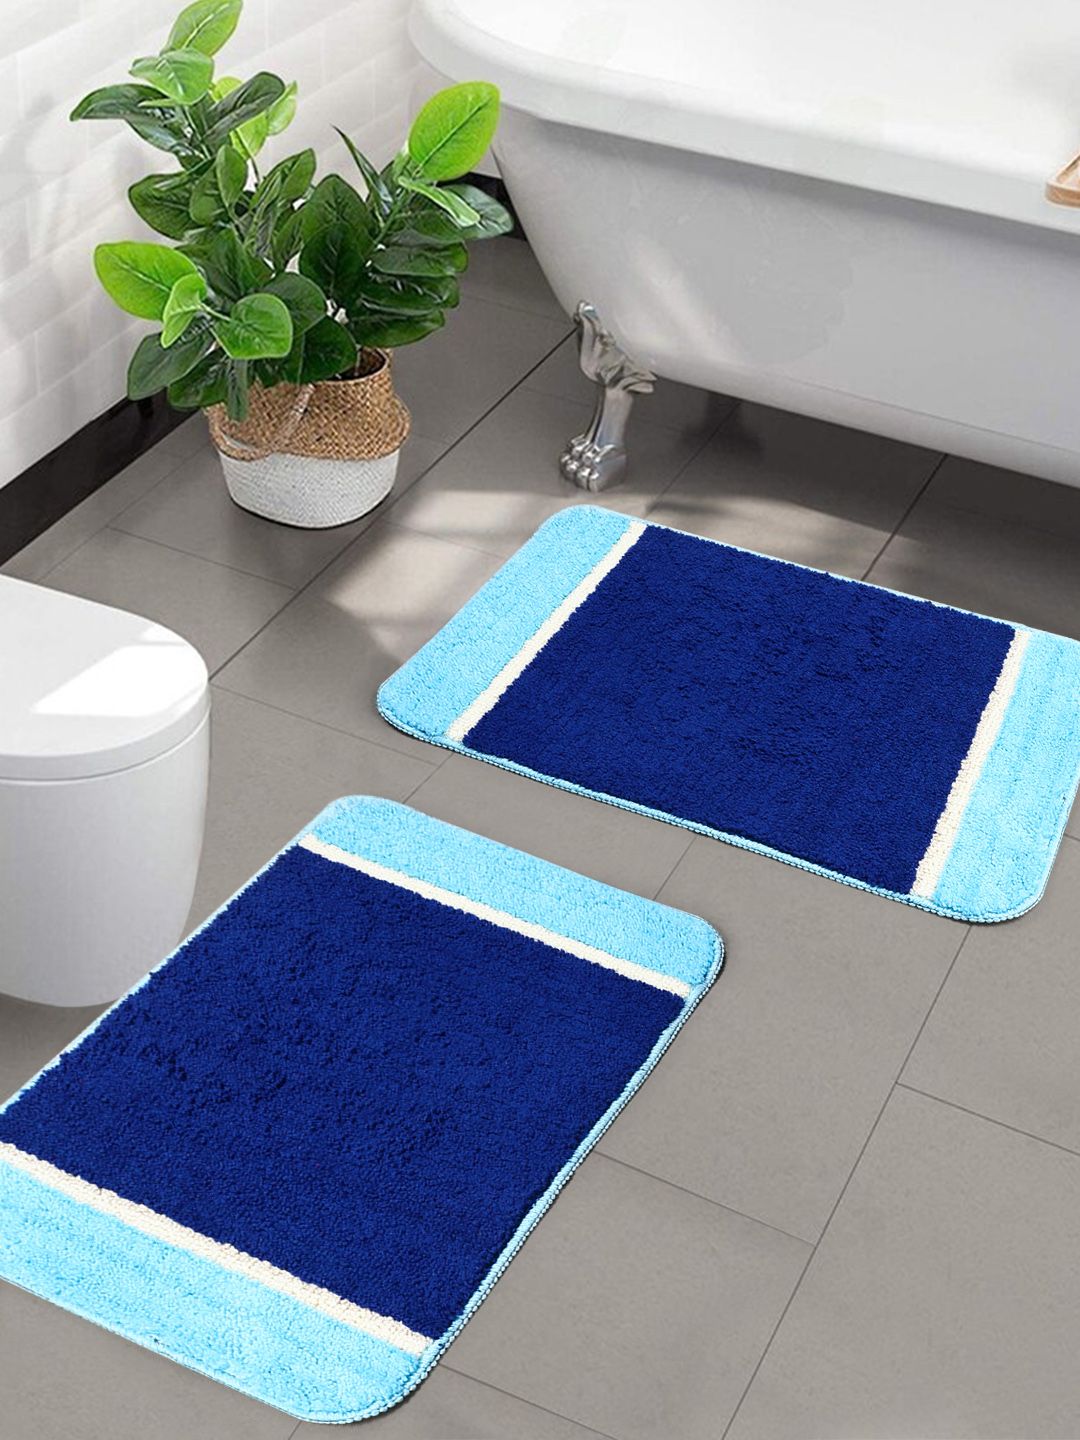 Saral Home Blue & White Soft Microfiber Anti-Skid Bathmat Price in India